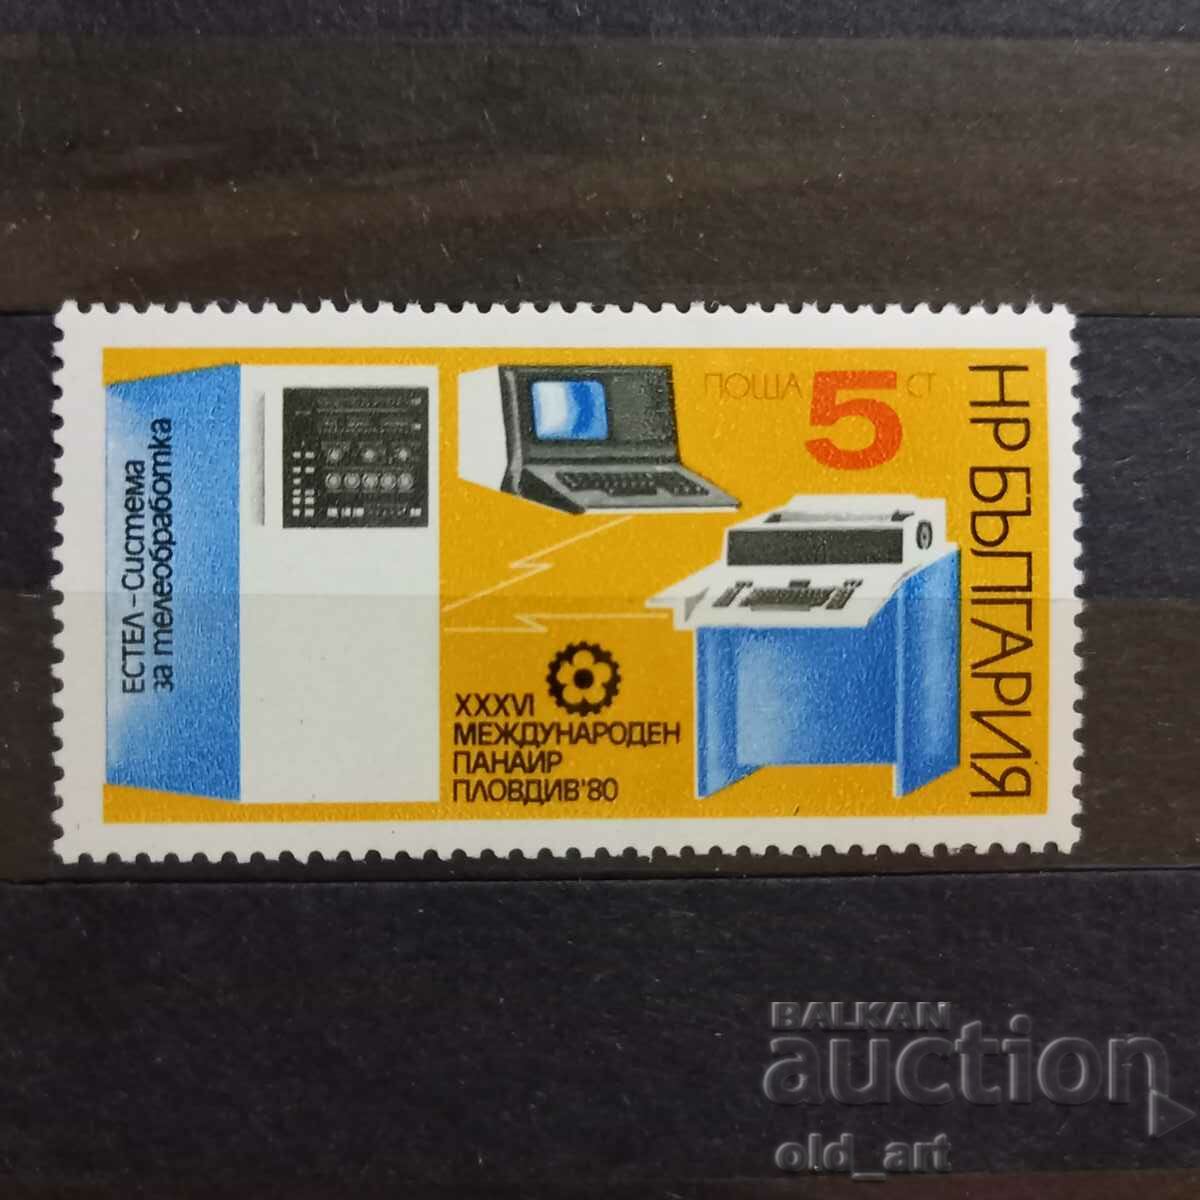 Mărci poștale - Târgul Internațional Plovdiv 1980